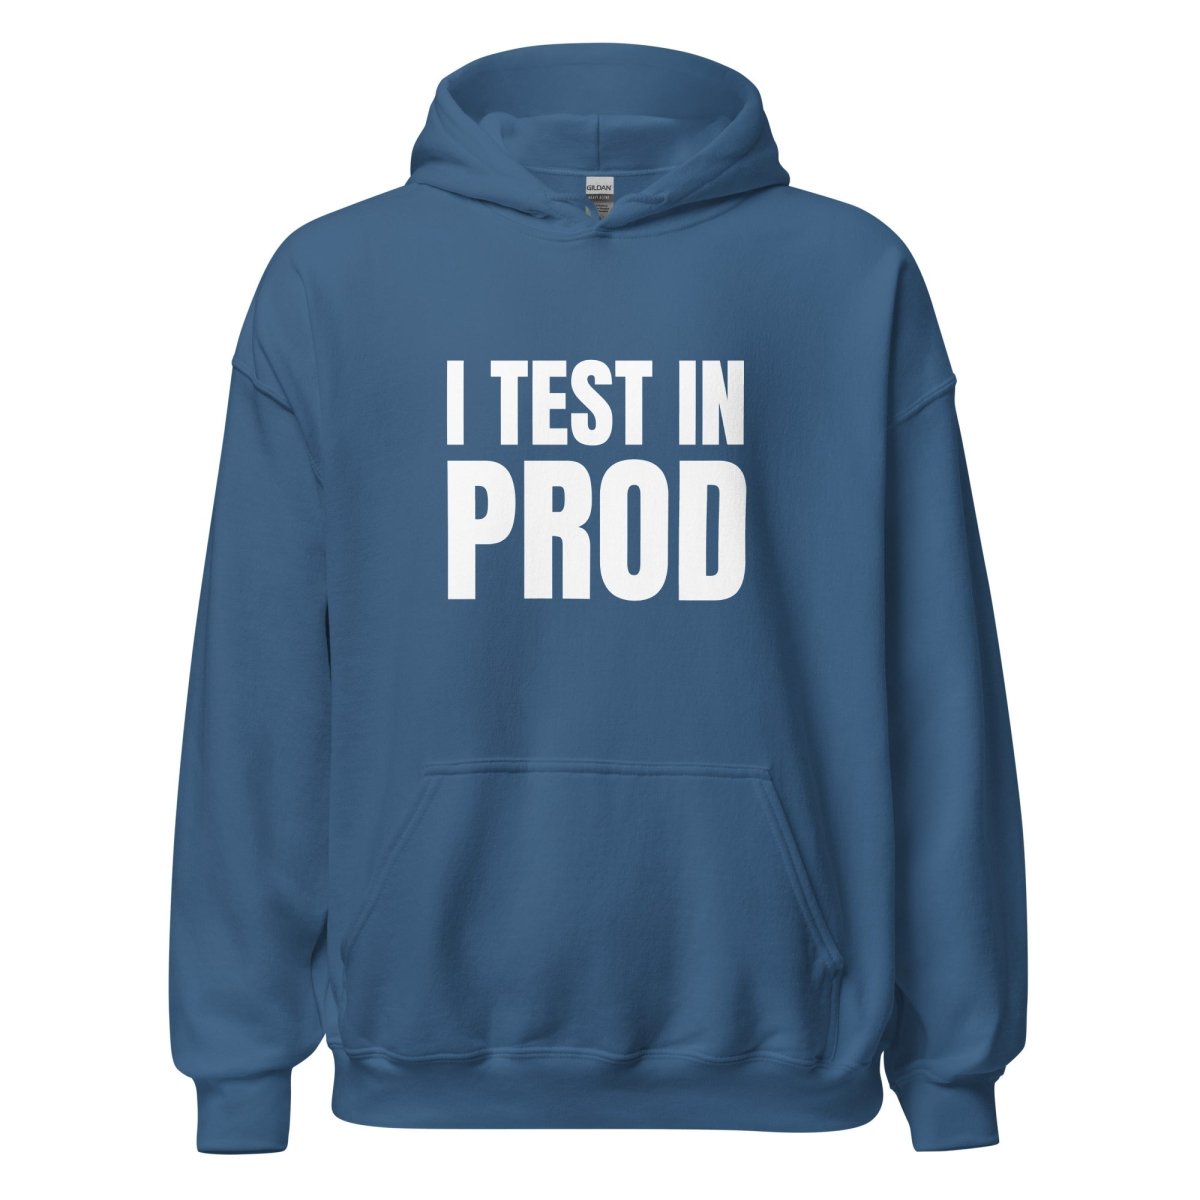 I Test in Prod Hoodie (unisex) - Indigo Blue - AI Store